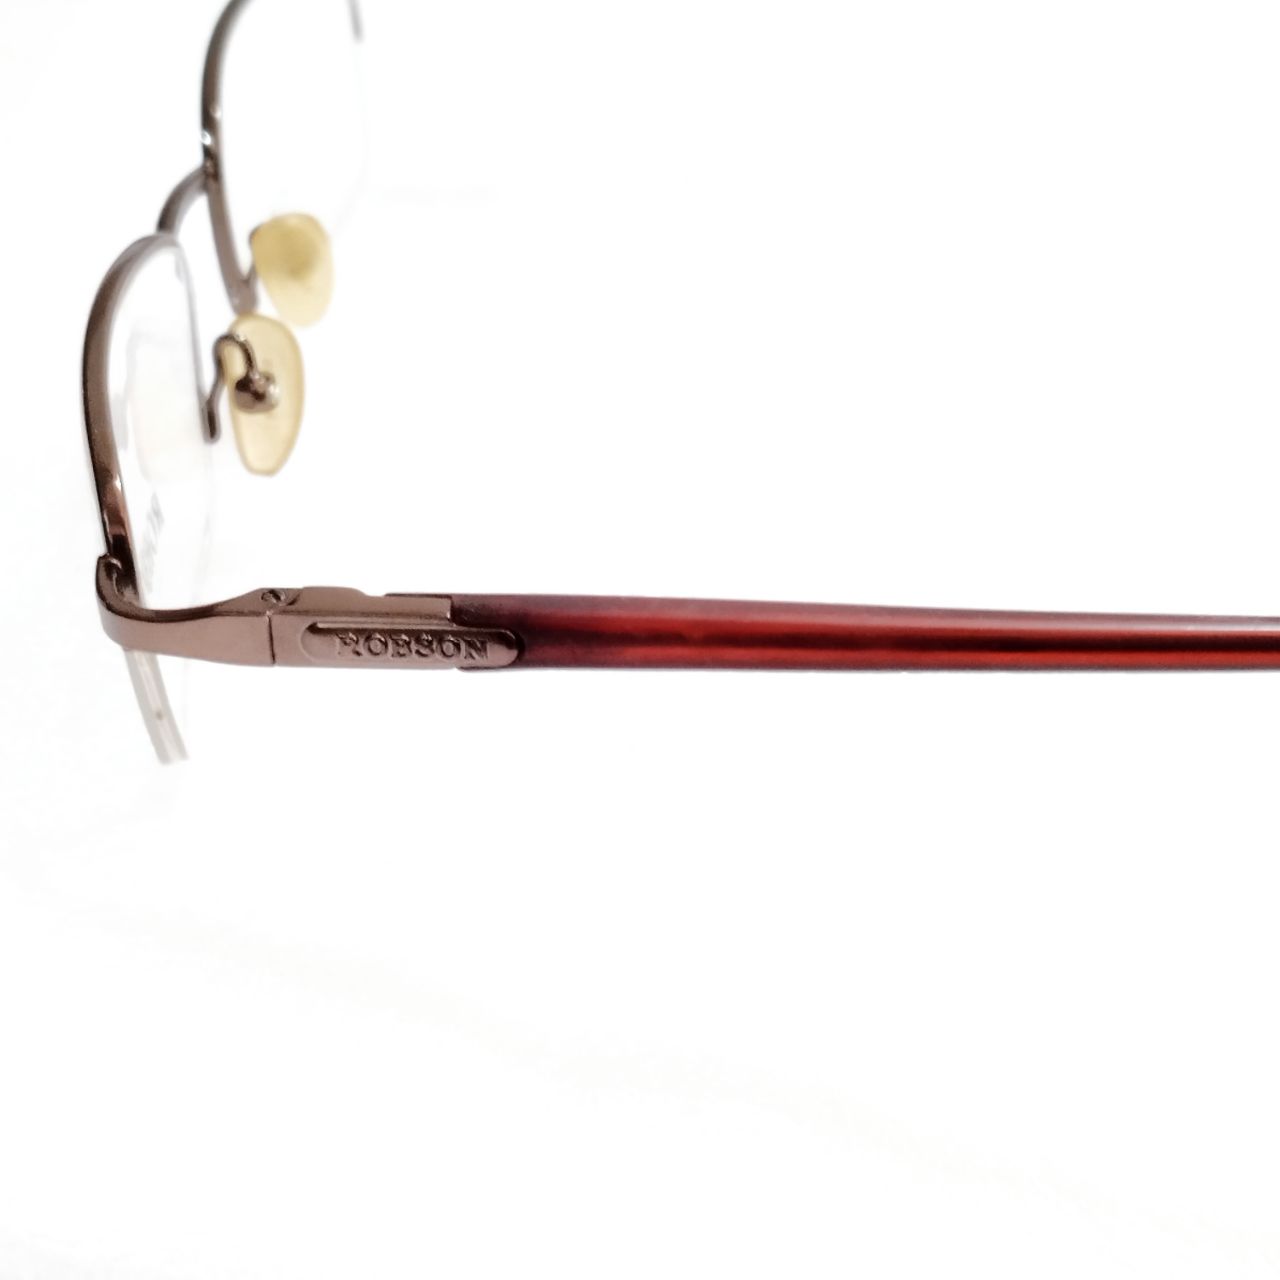 Copper Metal Supra Progressive Multifocal No-Line Bifocal Glasses for Men and Women